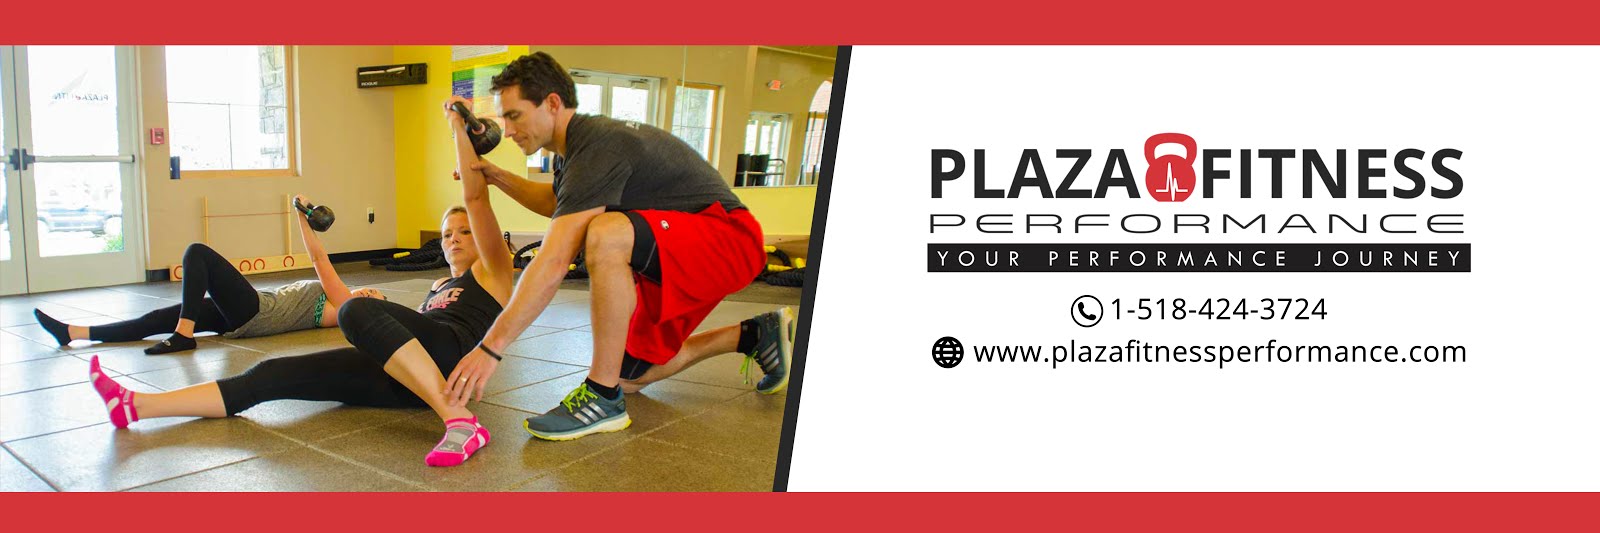 Plaza Fitness Performance